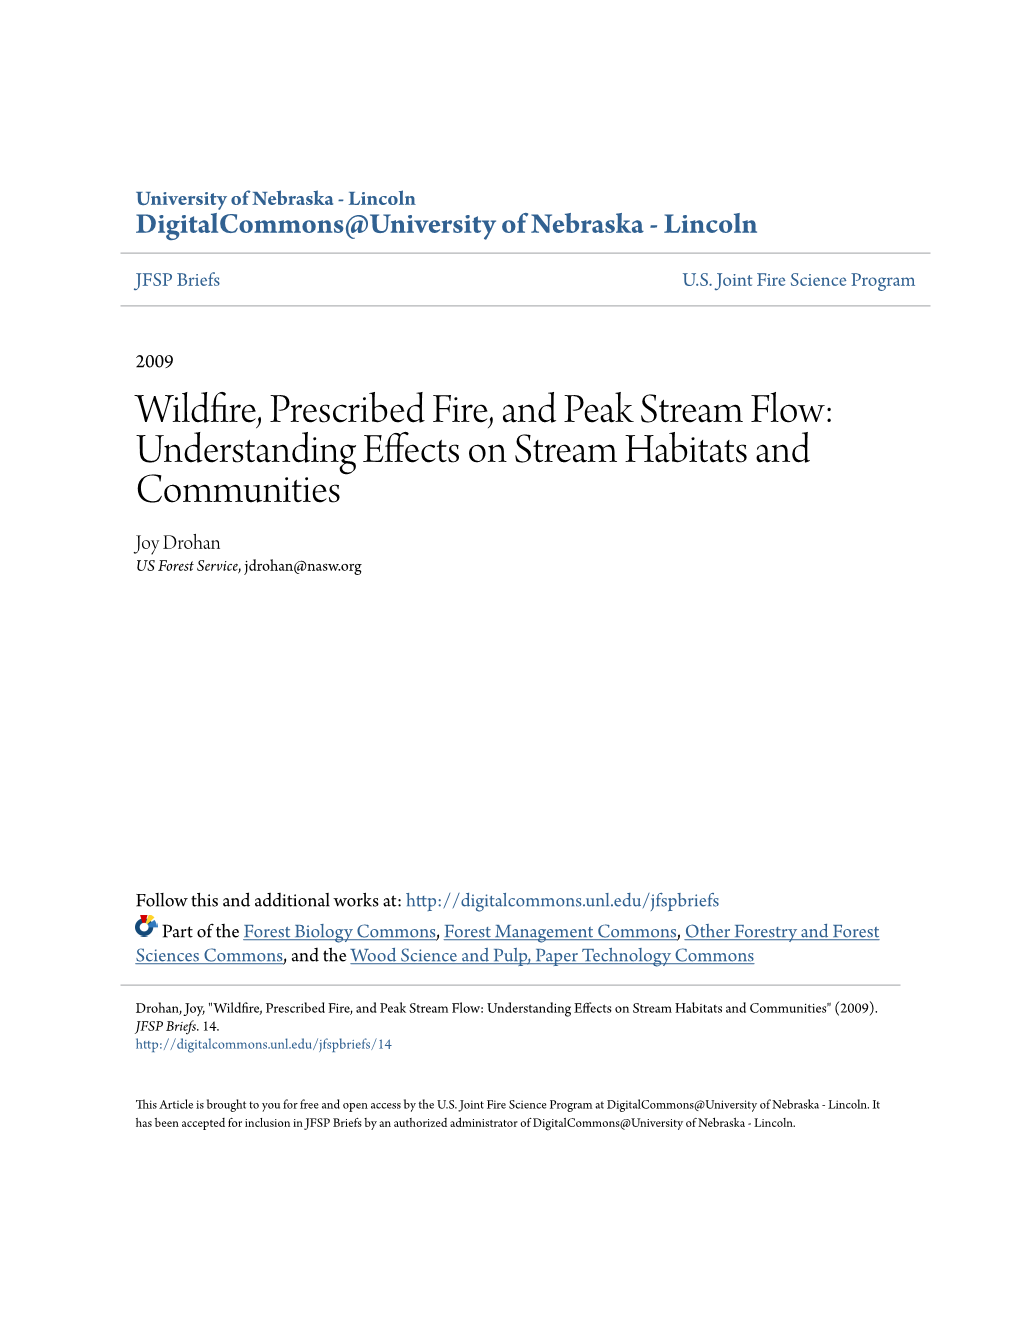 Wildfire, Prescribed Fire, and Peak Stream Flow: Understanding Effects on Stream Habitats and Communities Joy Drohan US Forest Service, Jdrohan@Nasw.Org